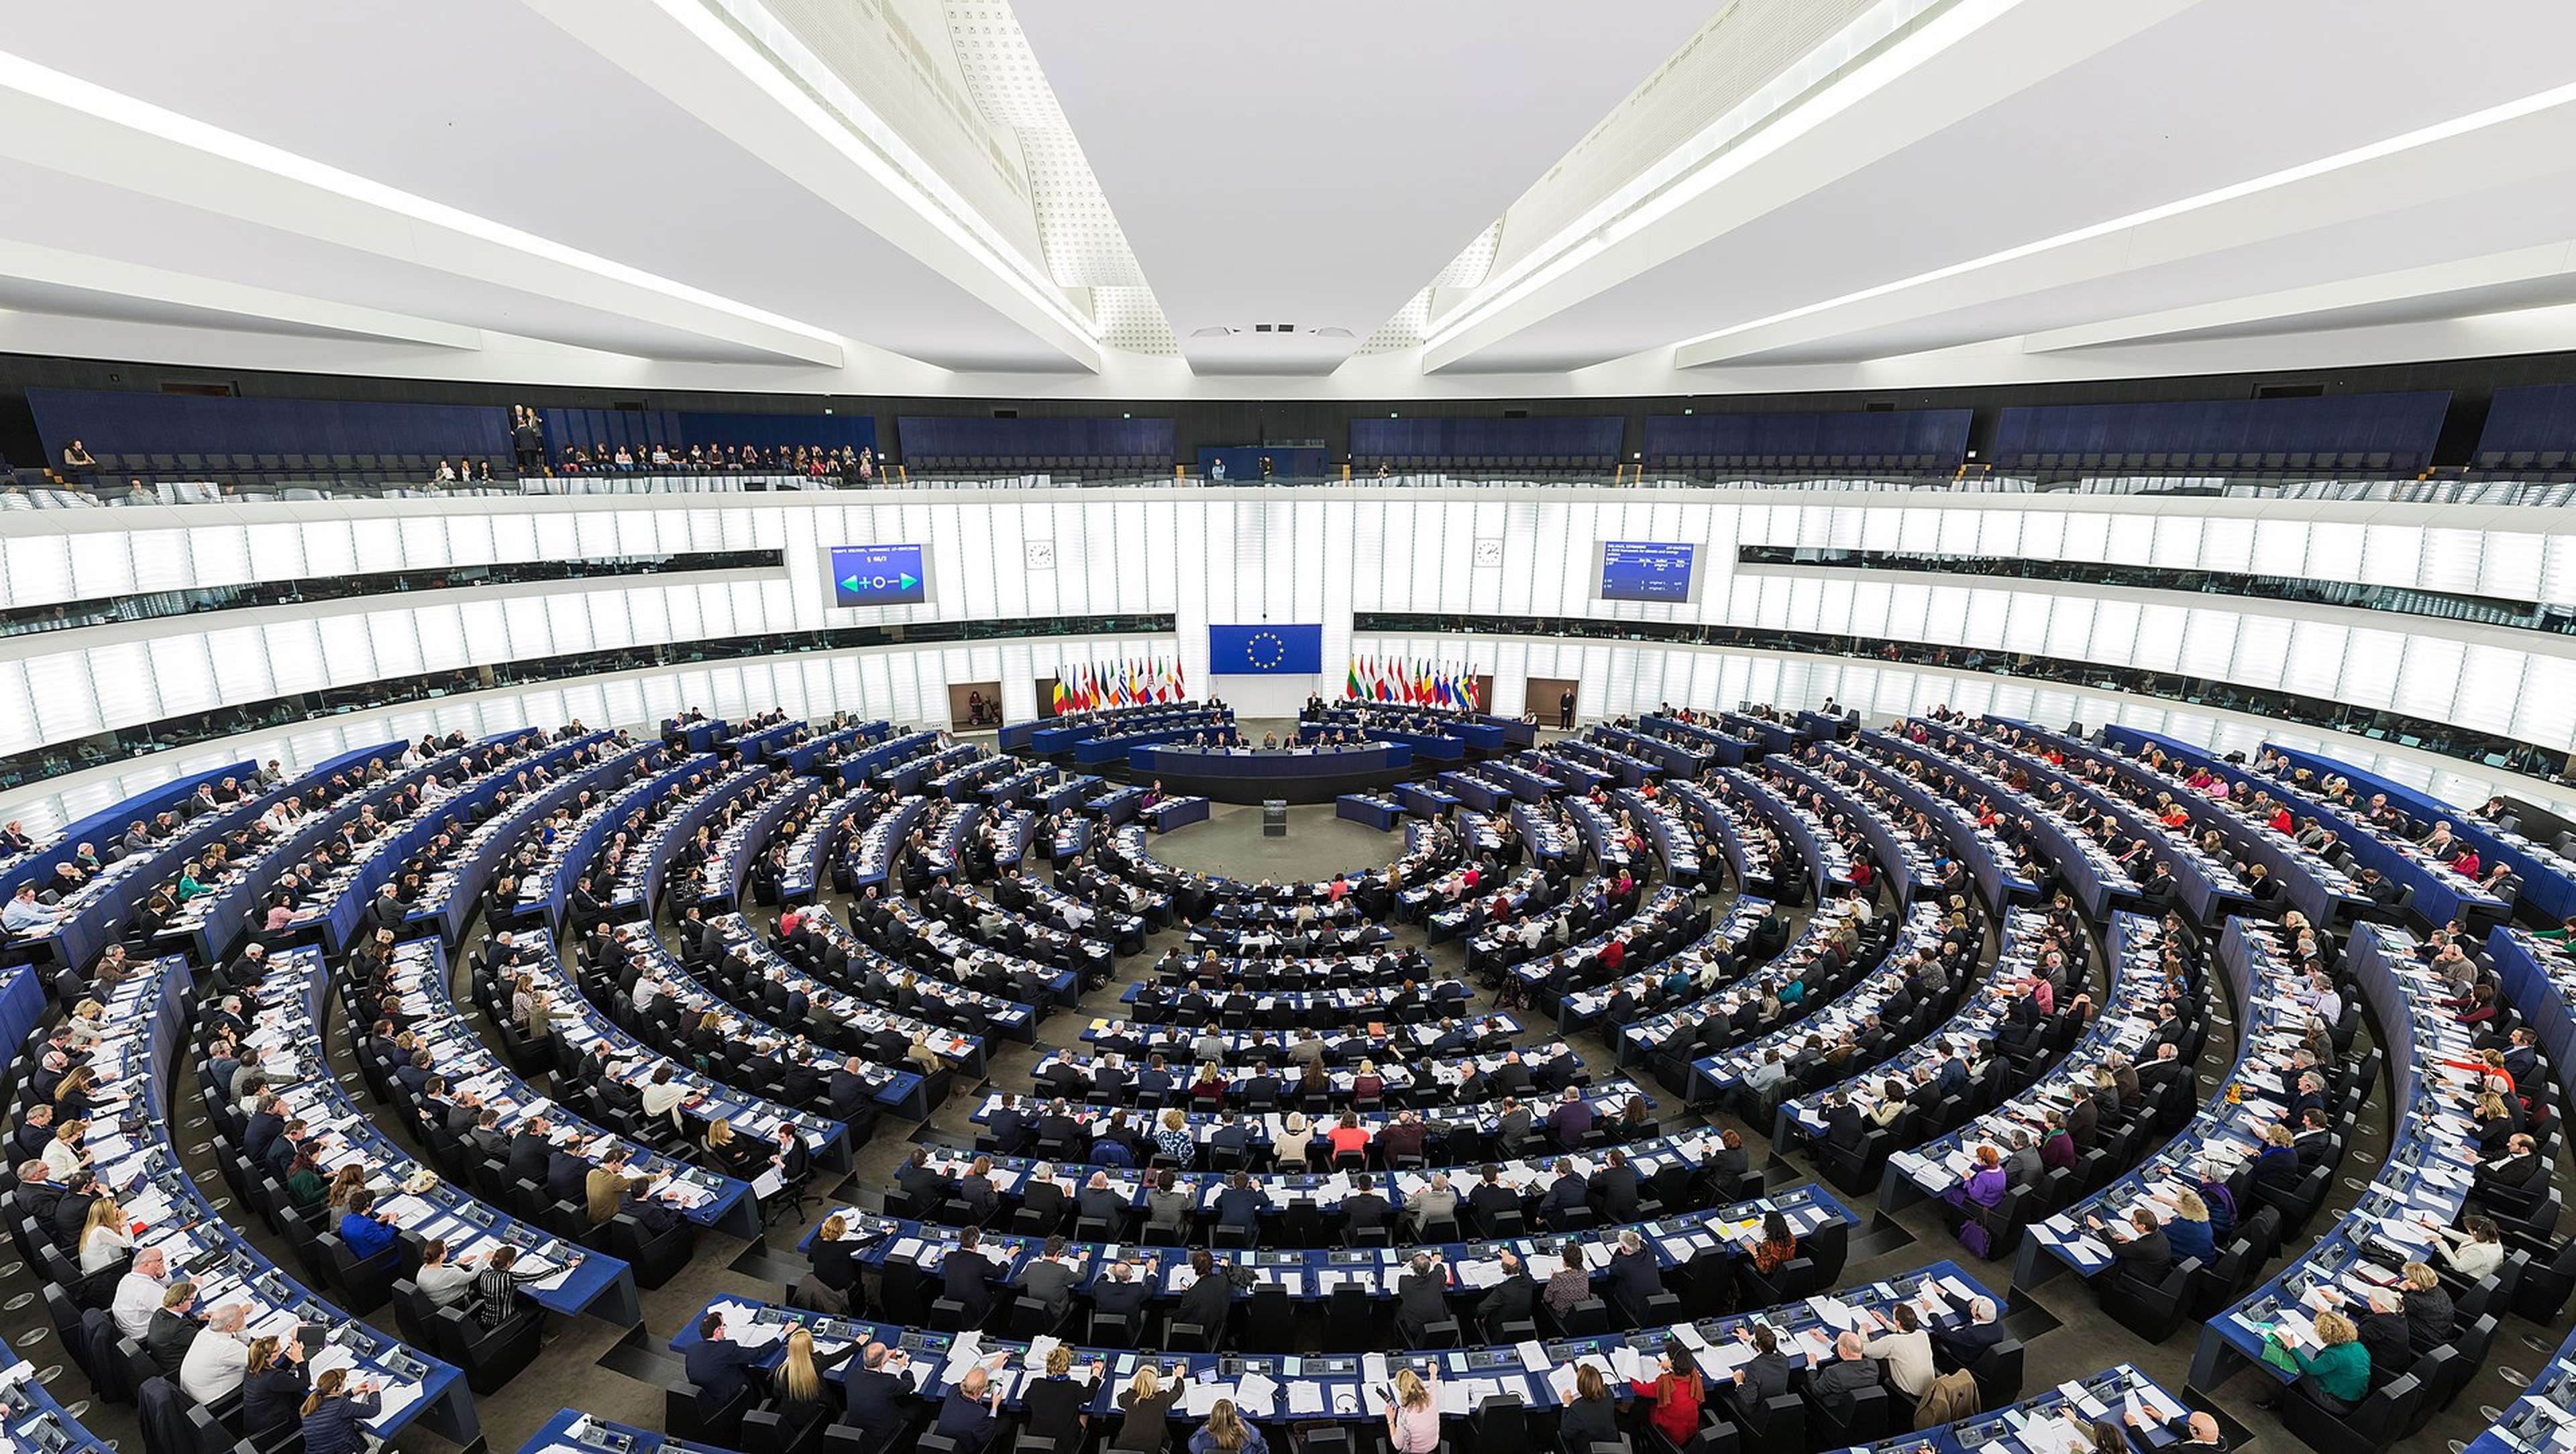 /2022/10/European_Parliament_Strasbourg_Hemicycle_-_Diliff_1